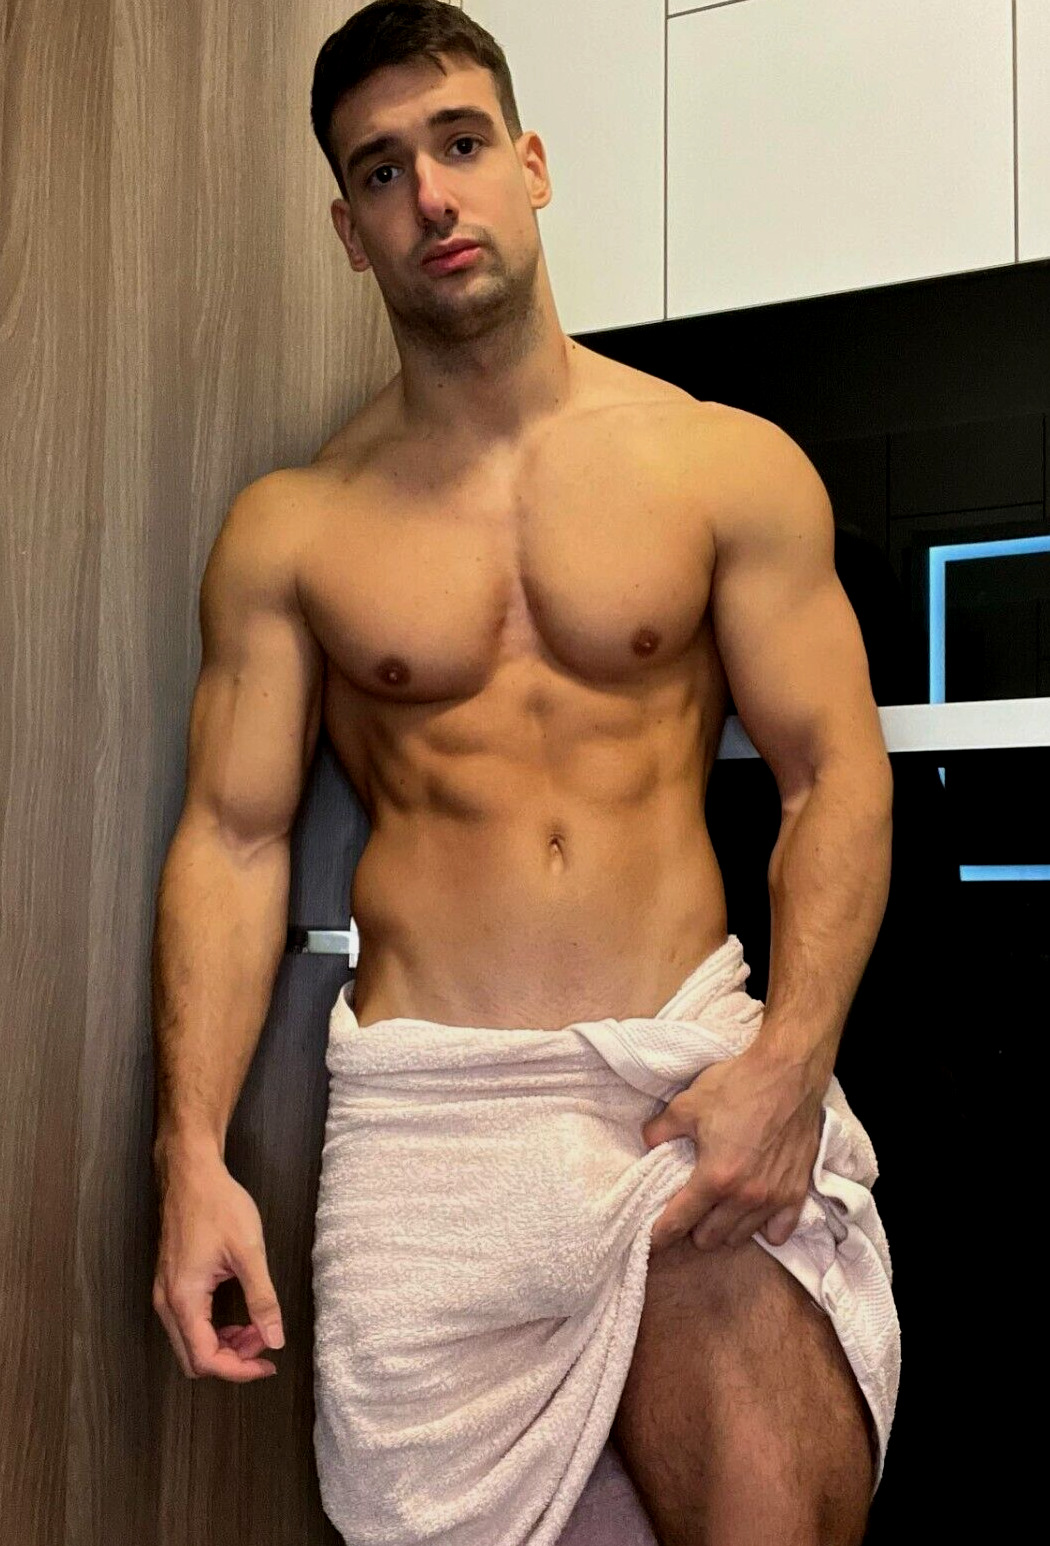 Shirtless Male Beefcake Muscular Towel Shower Jock Hunk Man PHOTO 4X6 H647